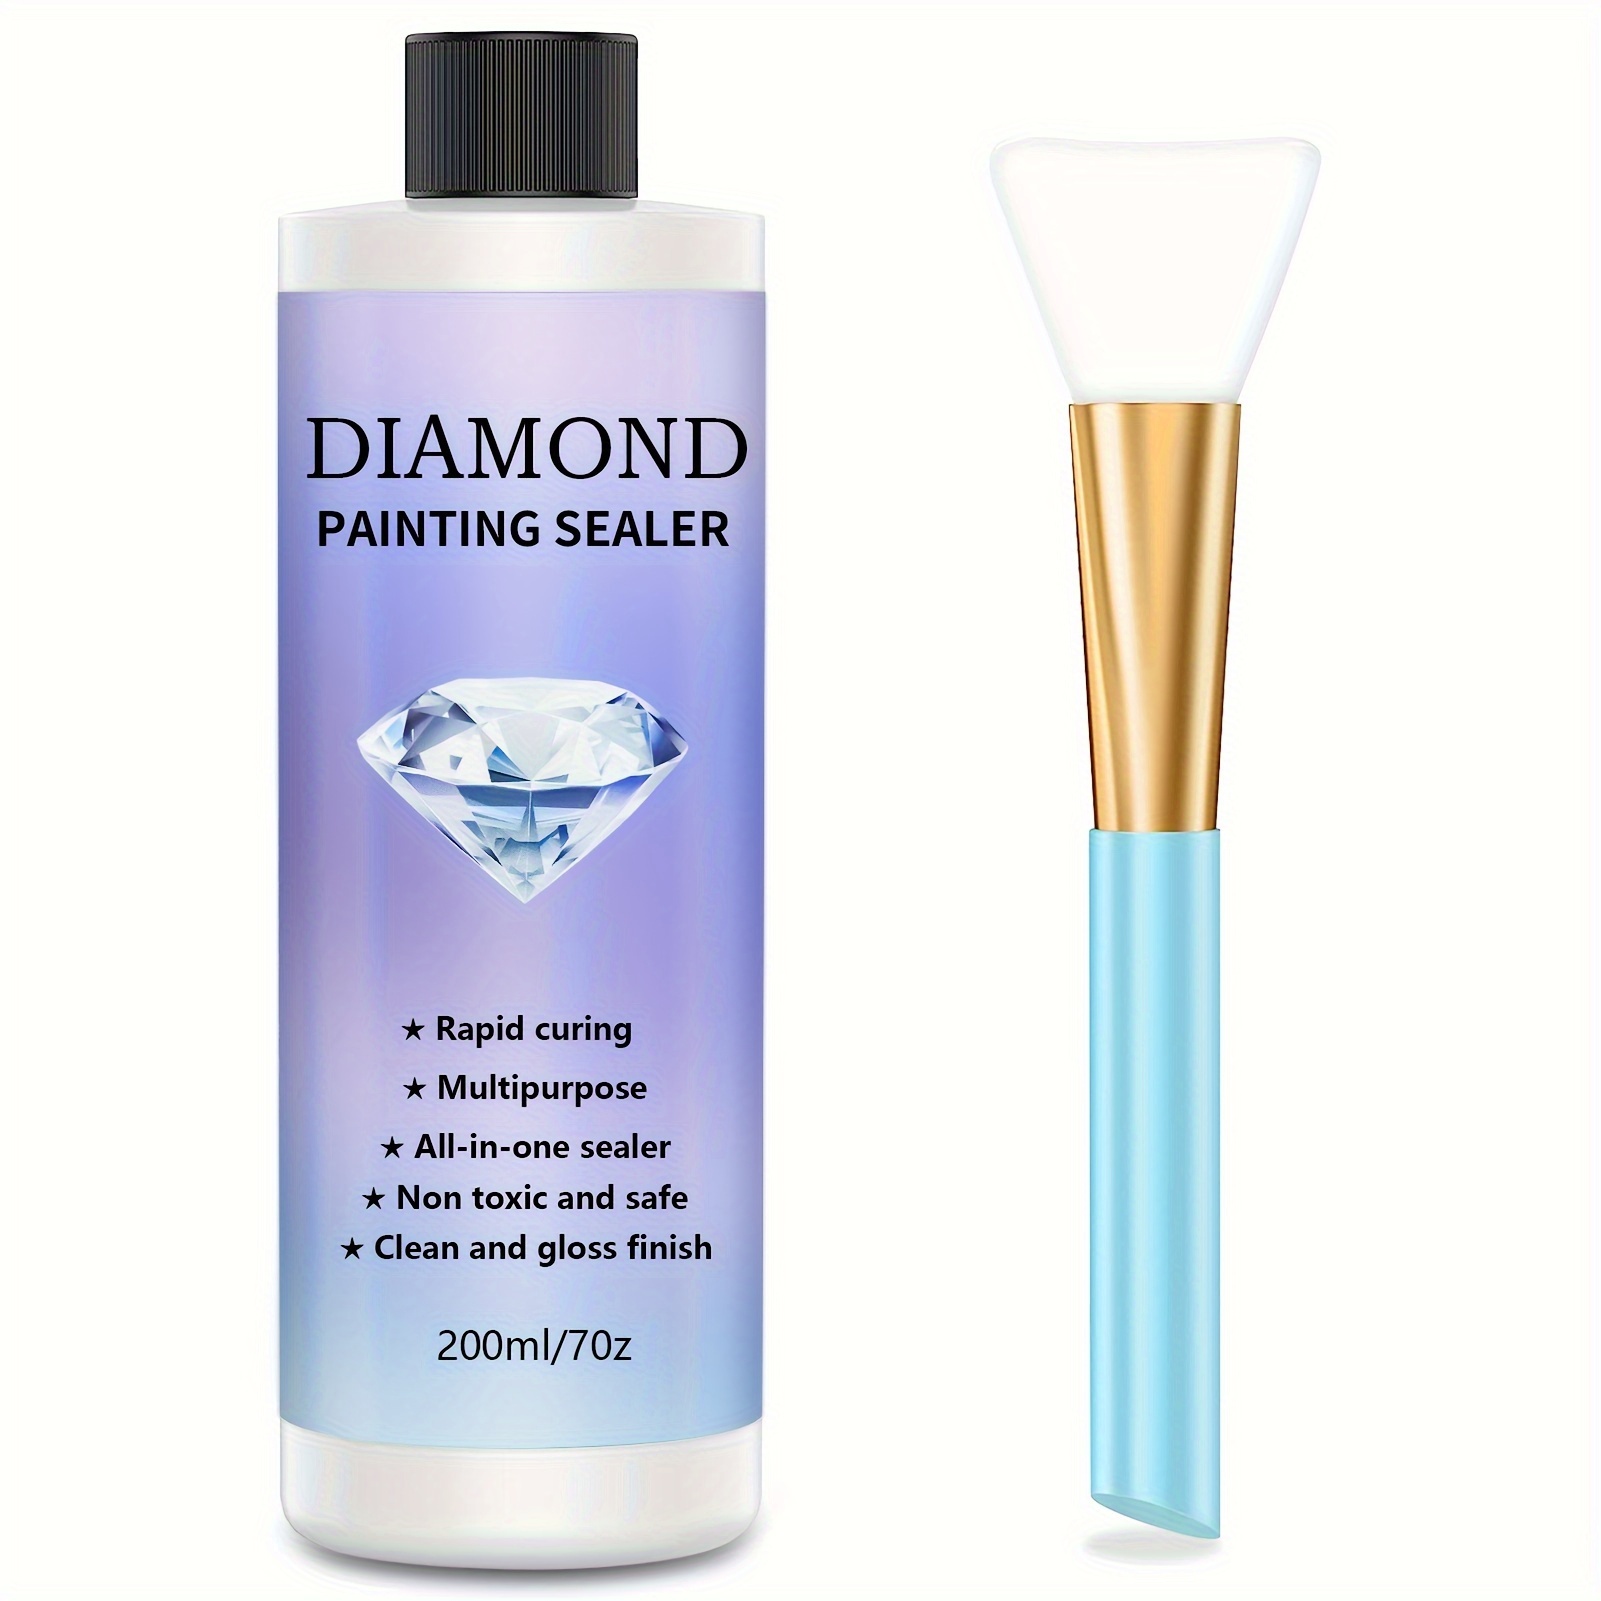 120ml Diamond Painting Conserver Sealing Glue Permanent Hold Shine